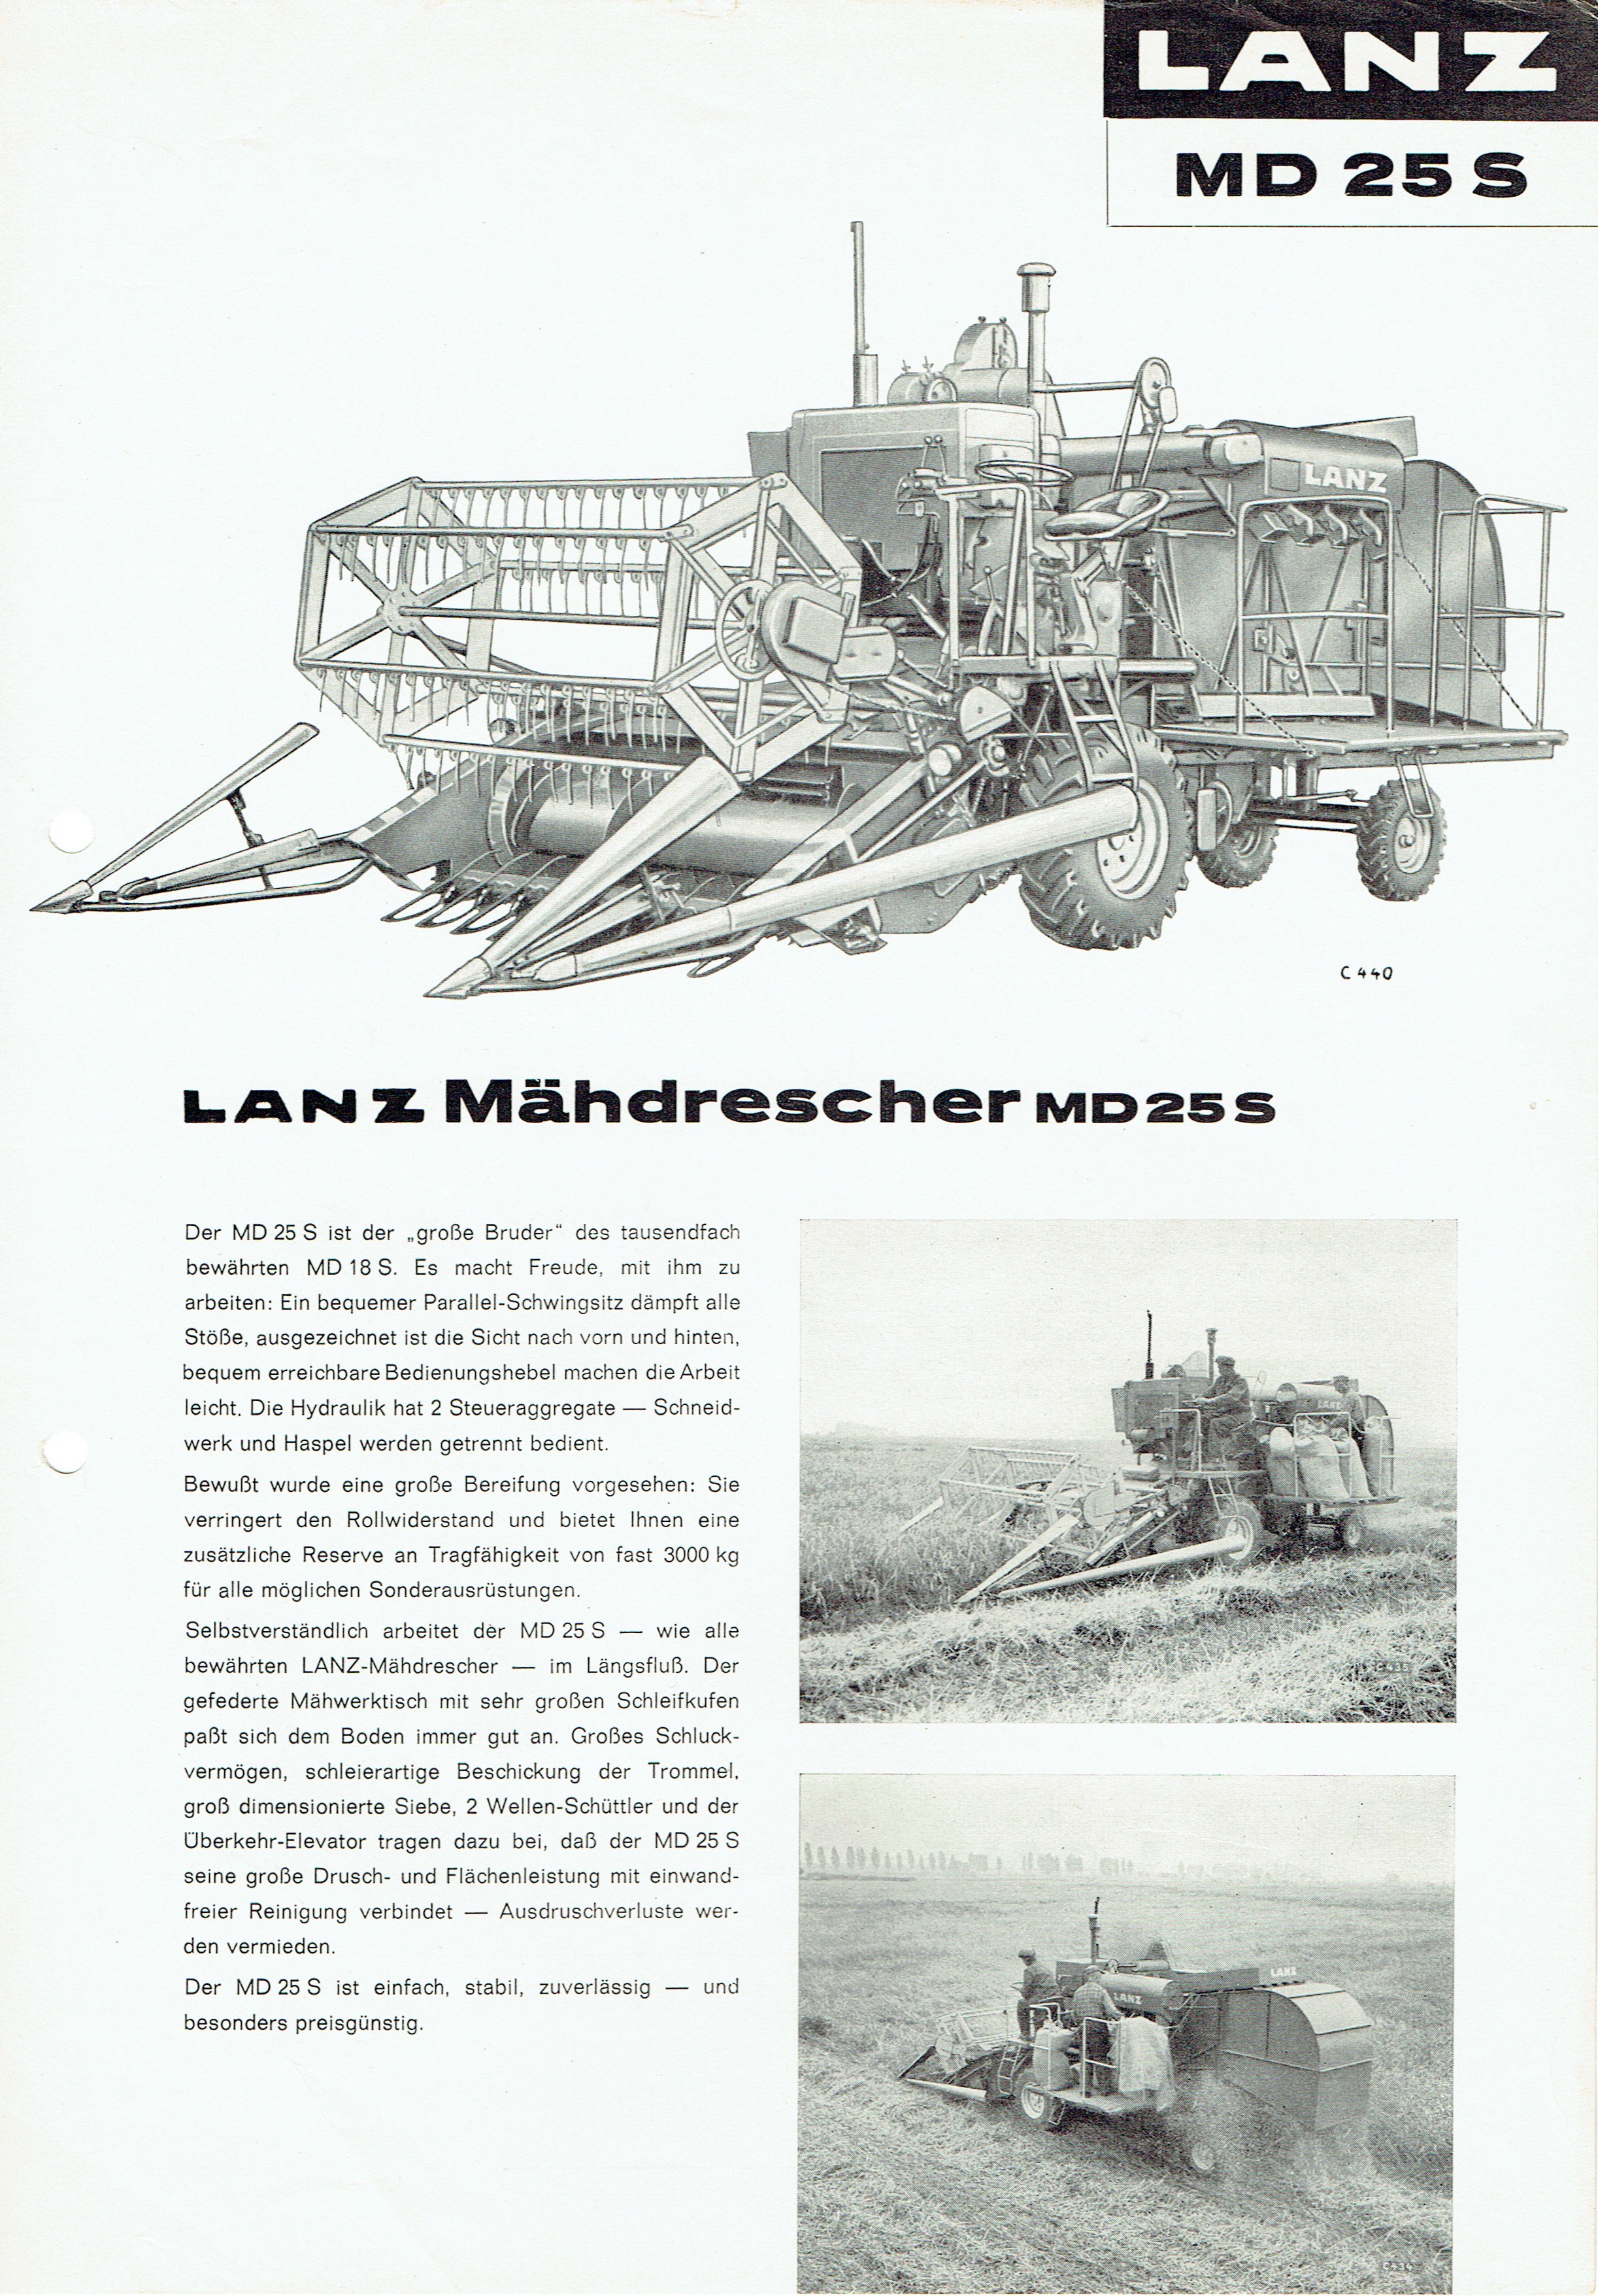 LANZ MD25S (Mähdrescherarchiv Kühnstetter CC BY-NC-SA)